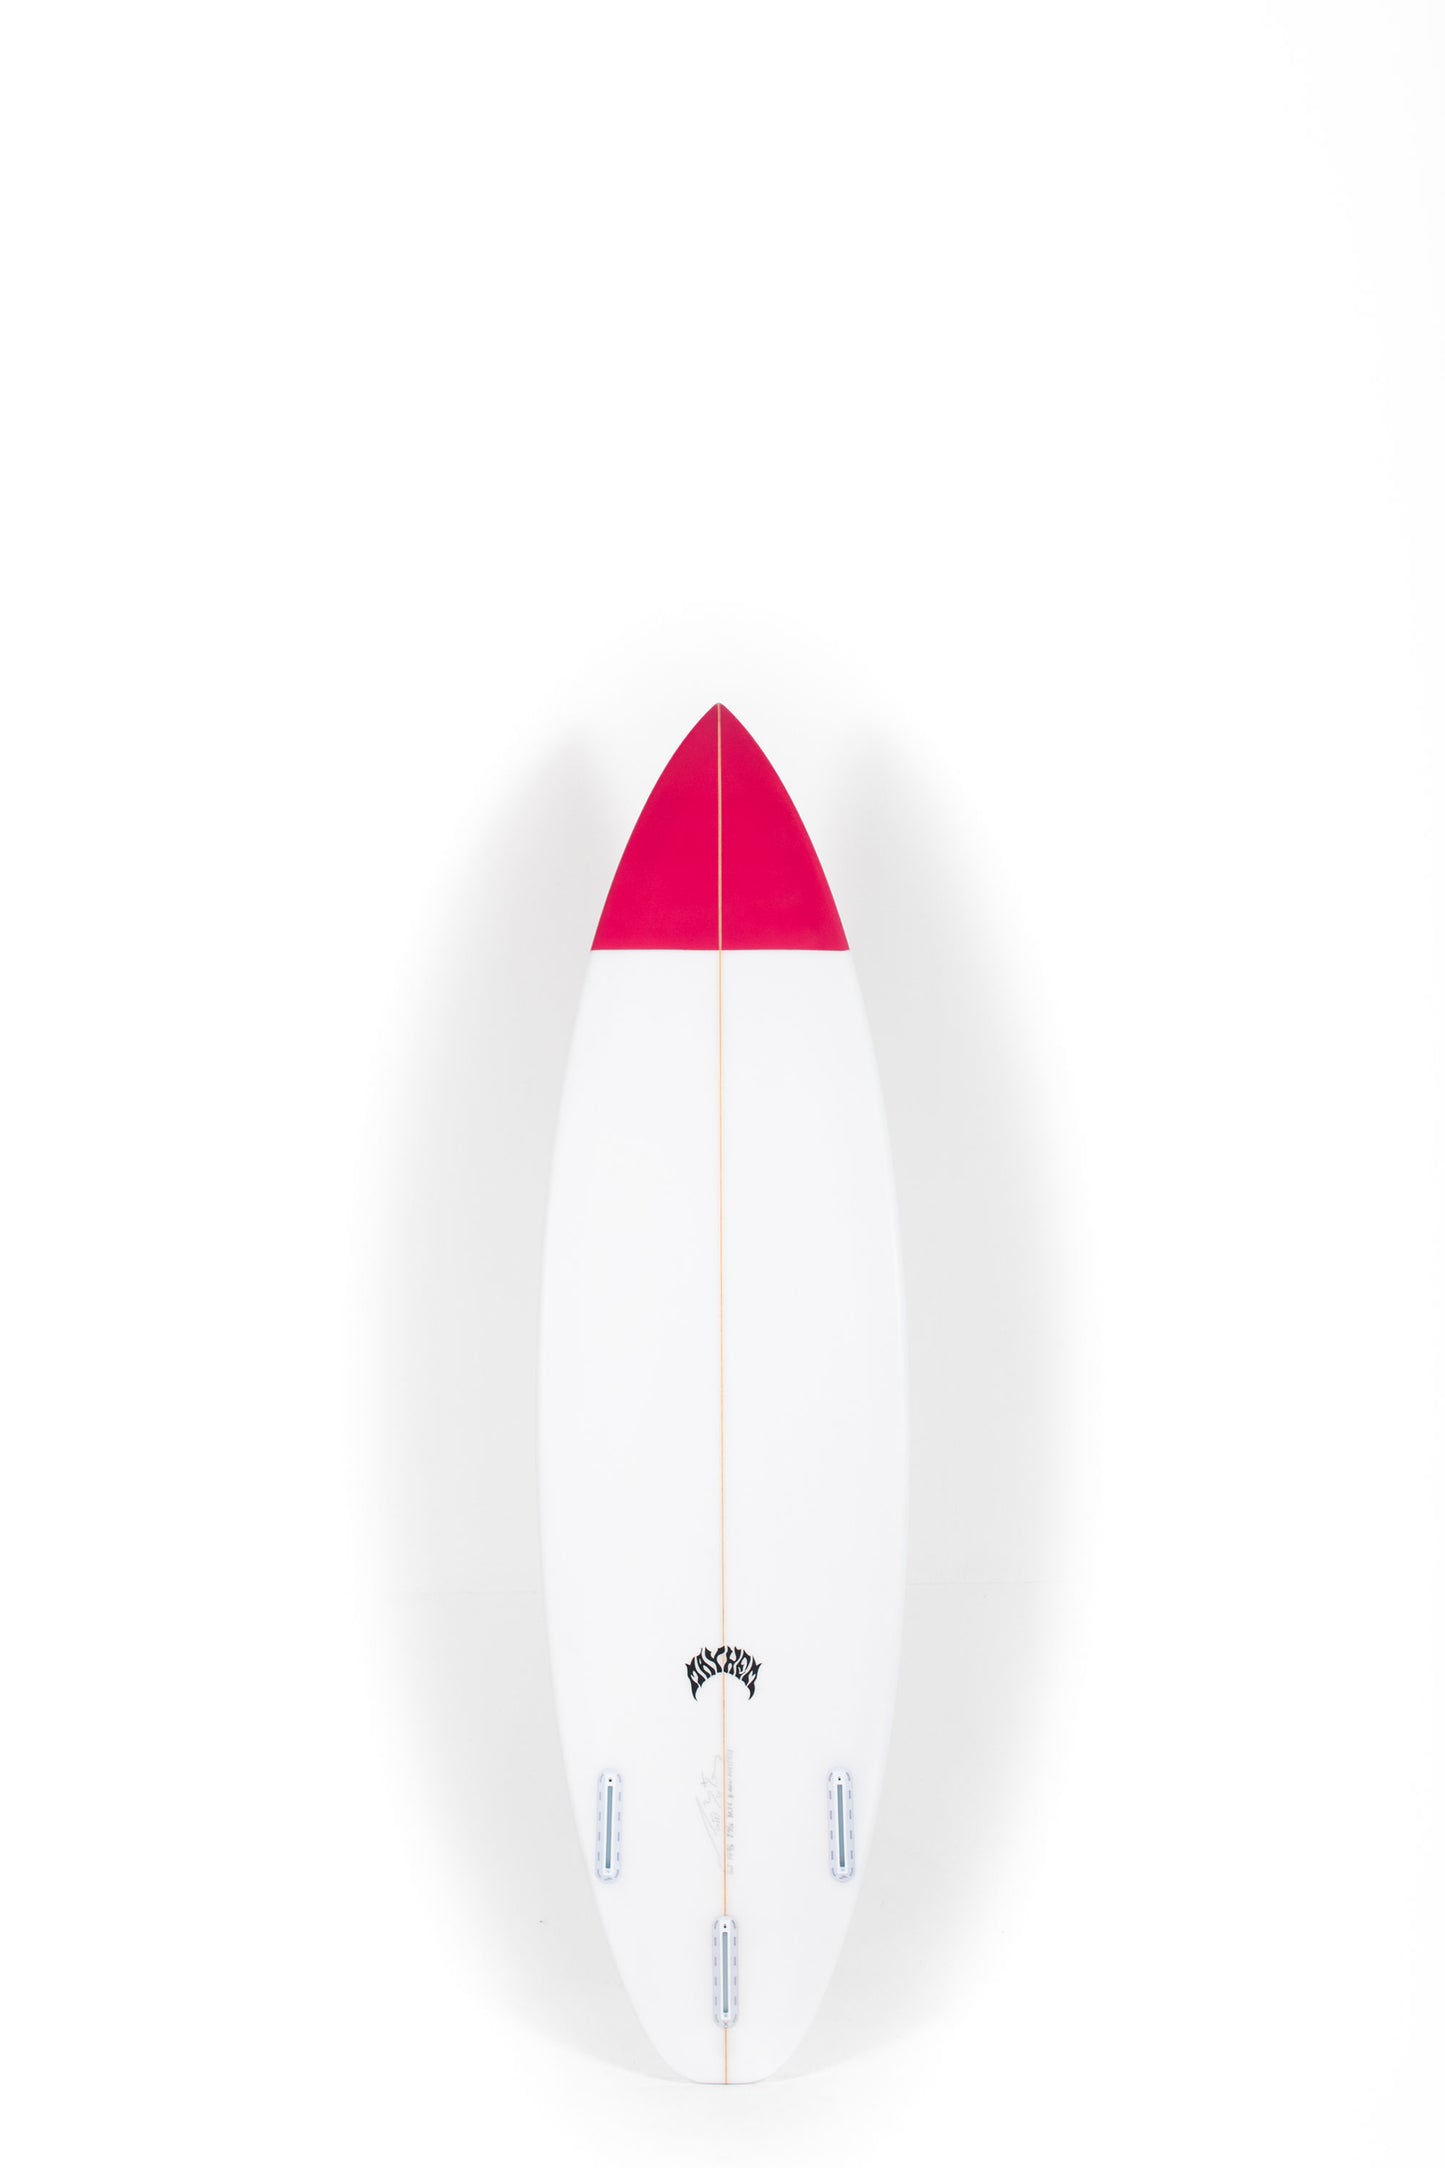 Pukas Surf Shop - Lost Surfboards - DRIVER 3.0 by Matt Biolos - 6'1" x 19 3/8 x 2 9/16 x 31,25L - MH15421